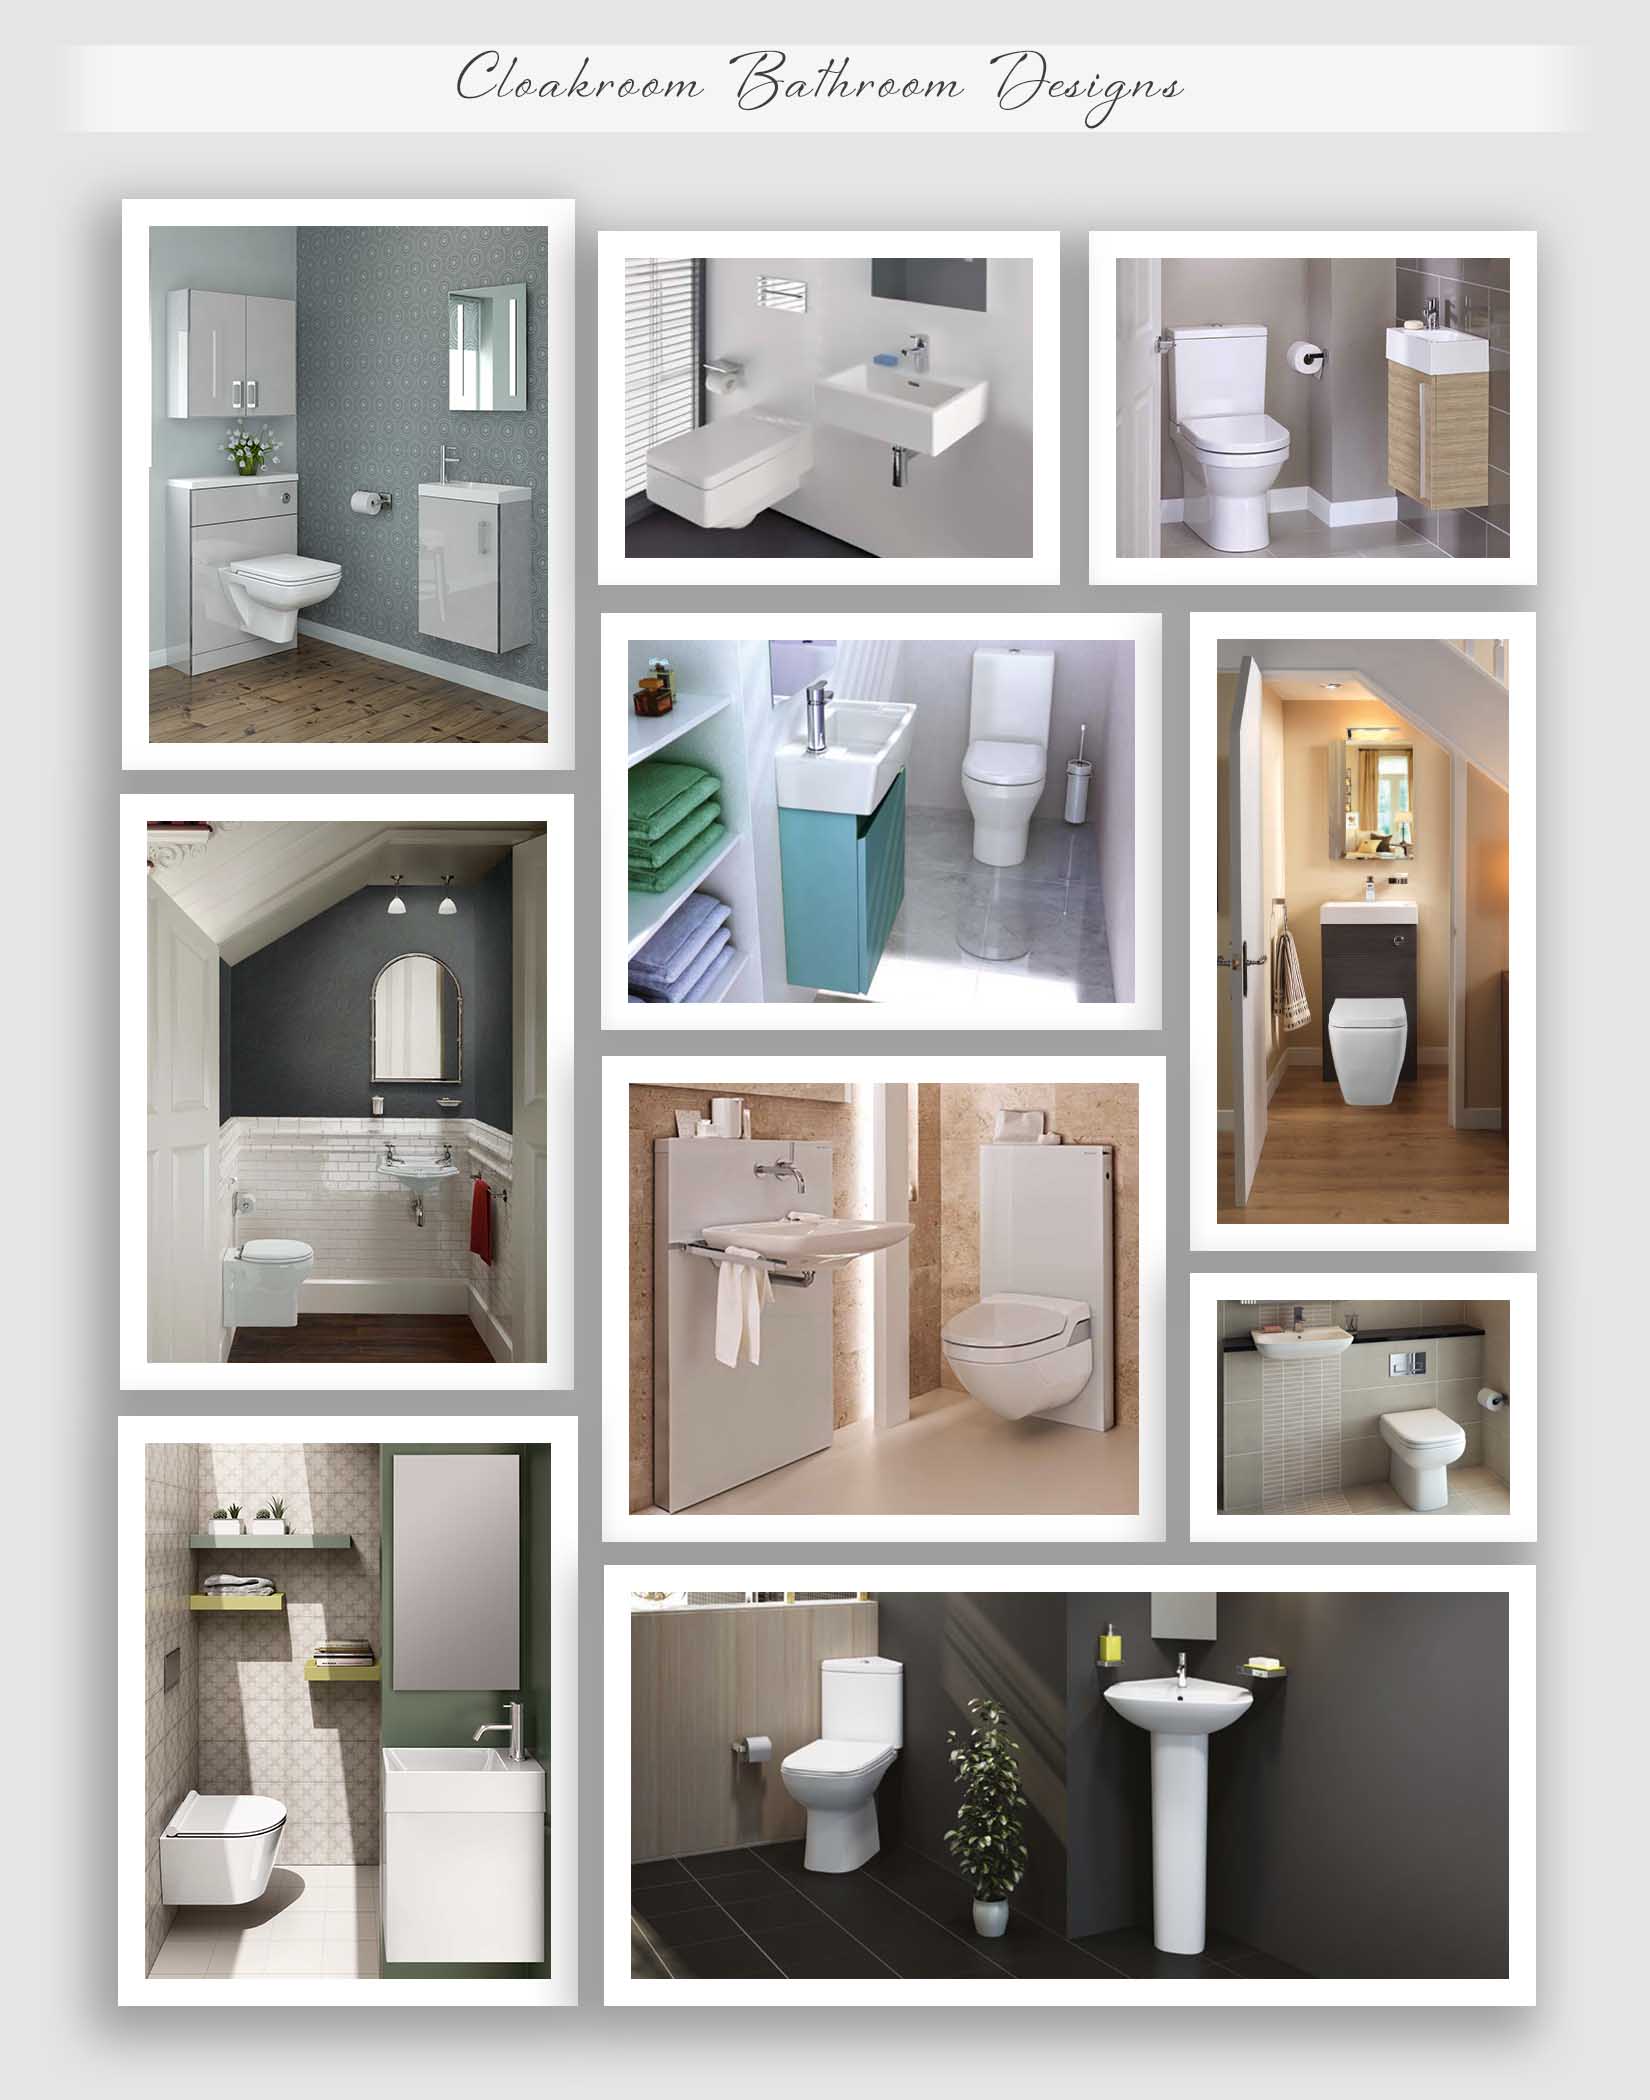 range of luxury modern designer cloakroom bathrooms and toilets